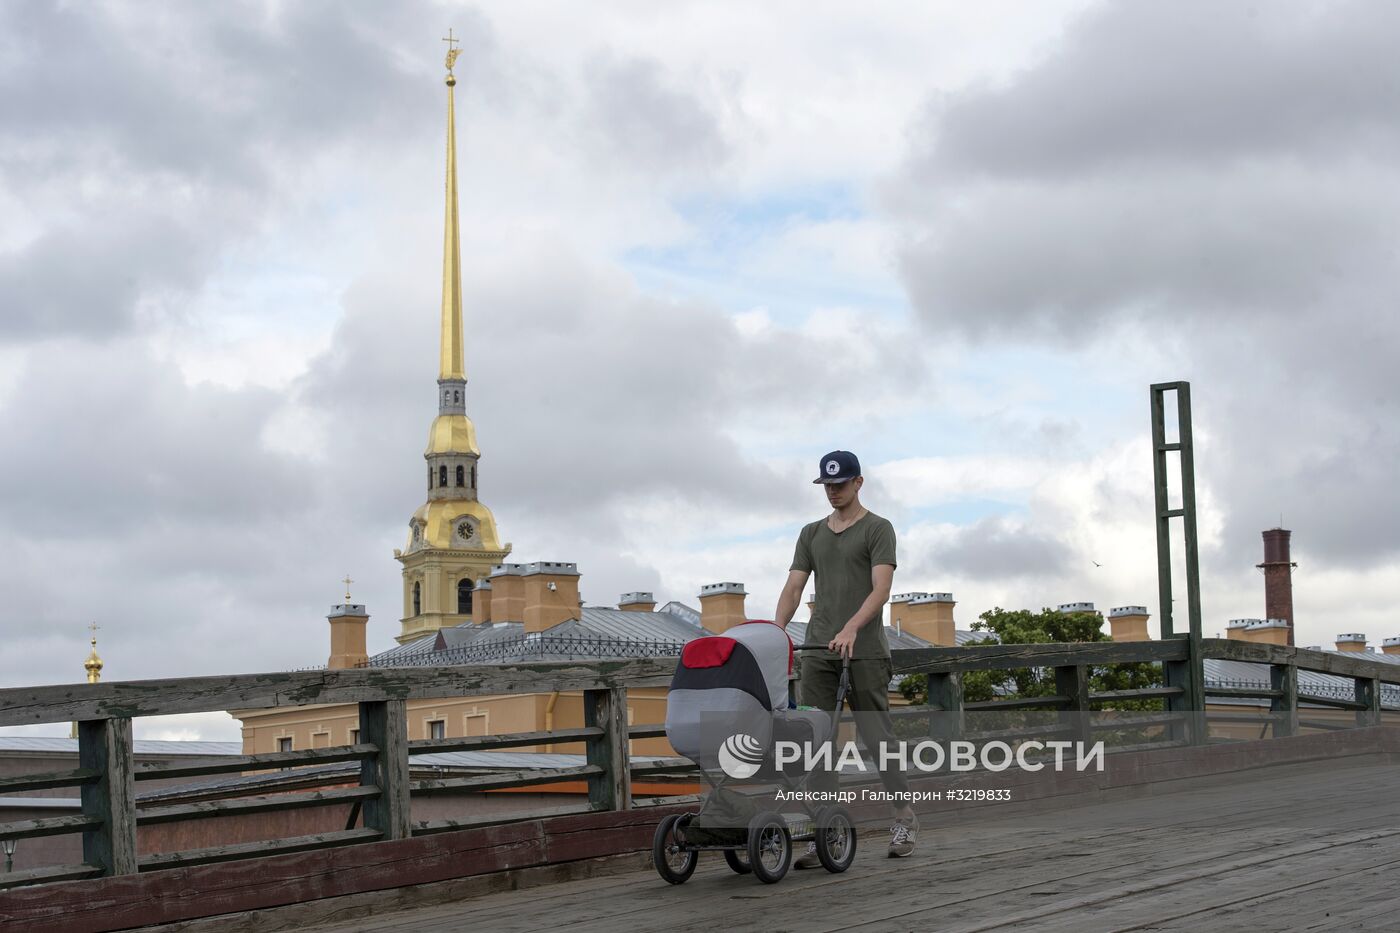 Виды Санкт-Петербурга